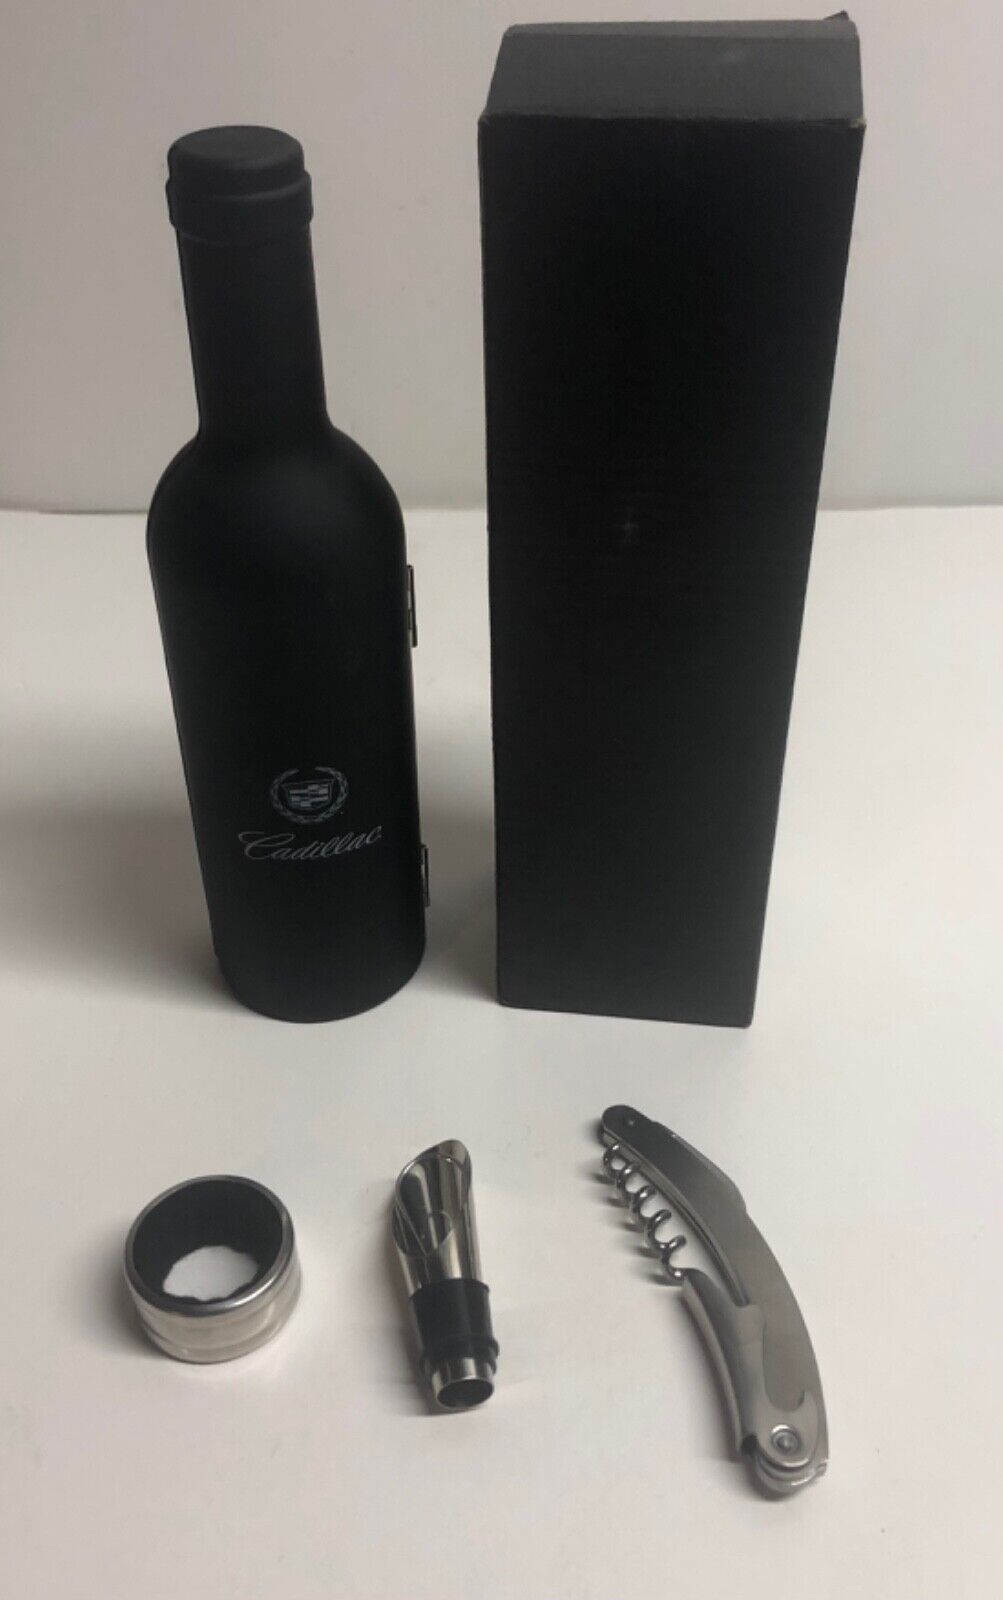 Cadillac: Leeds Wine Bottle Accessories 3 Piece Set